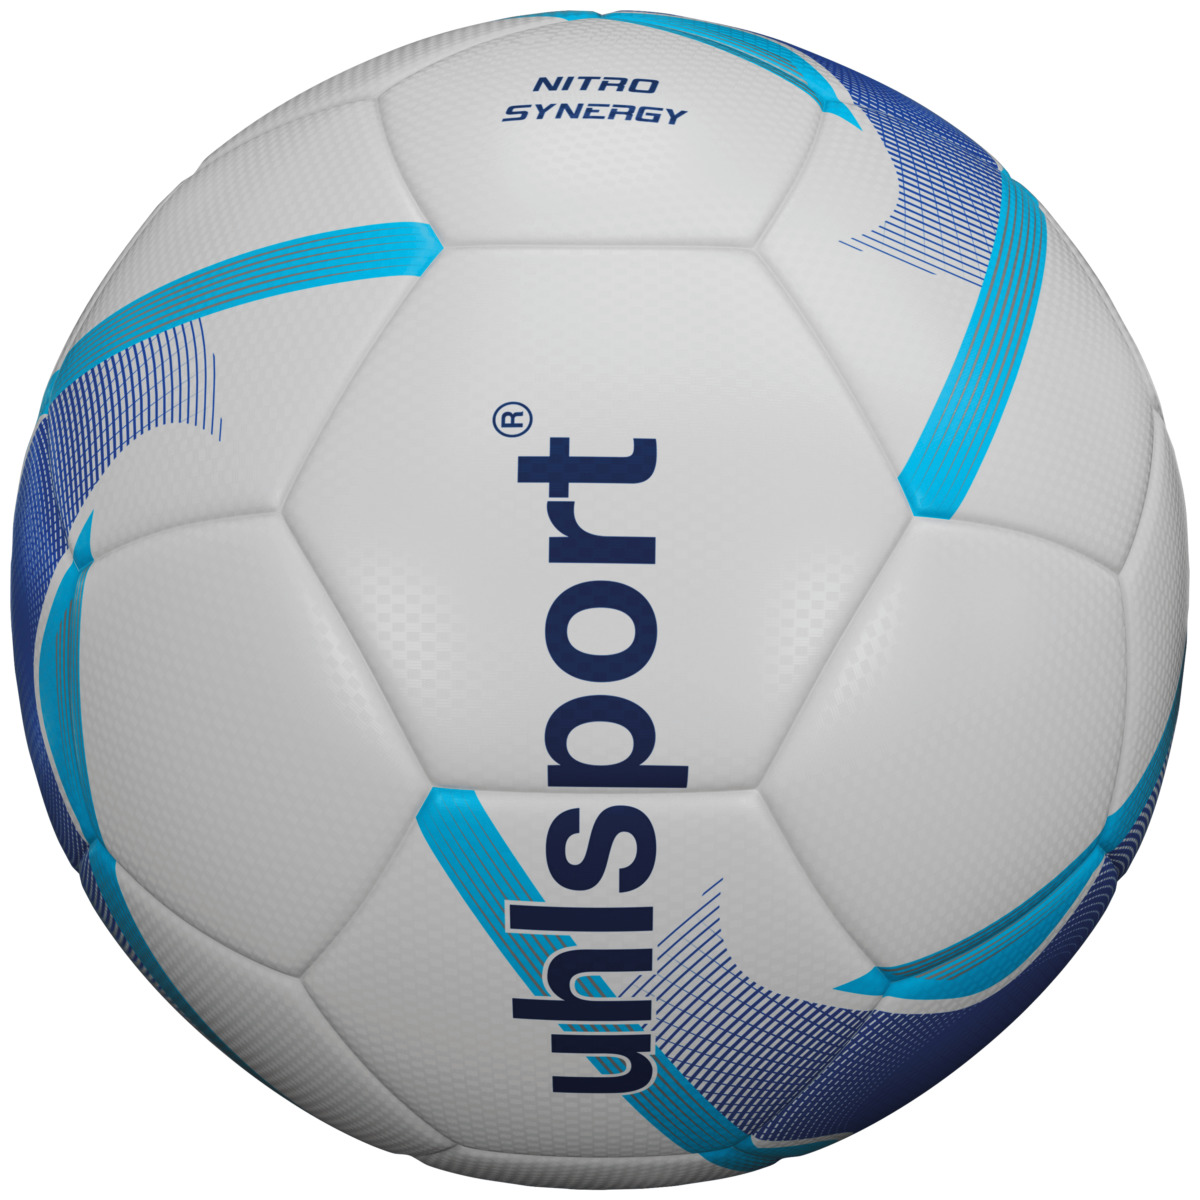 uhlsport Unisex - Erwachsene Nitro Synergy Ball, Fußball, weiß/blau/Cyan, 5